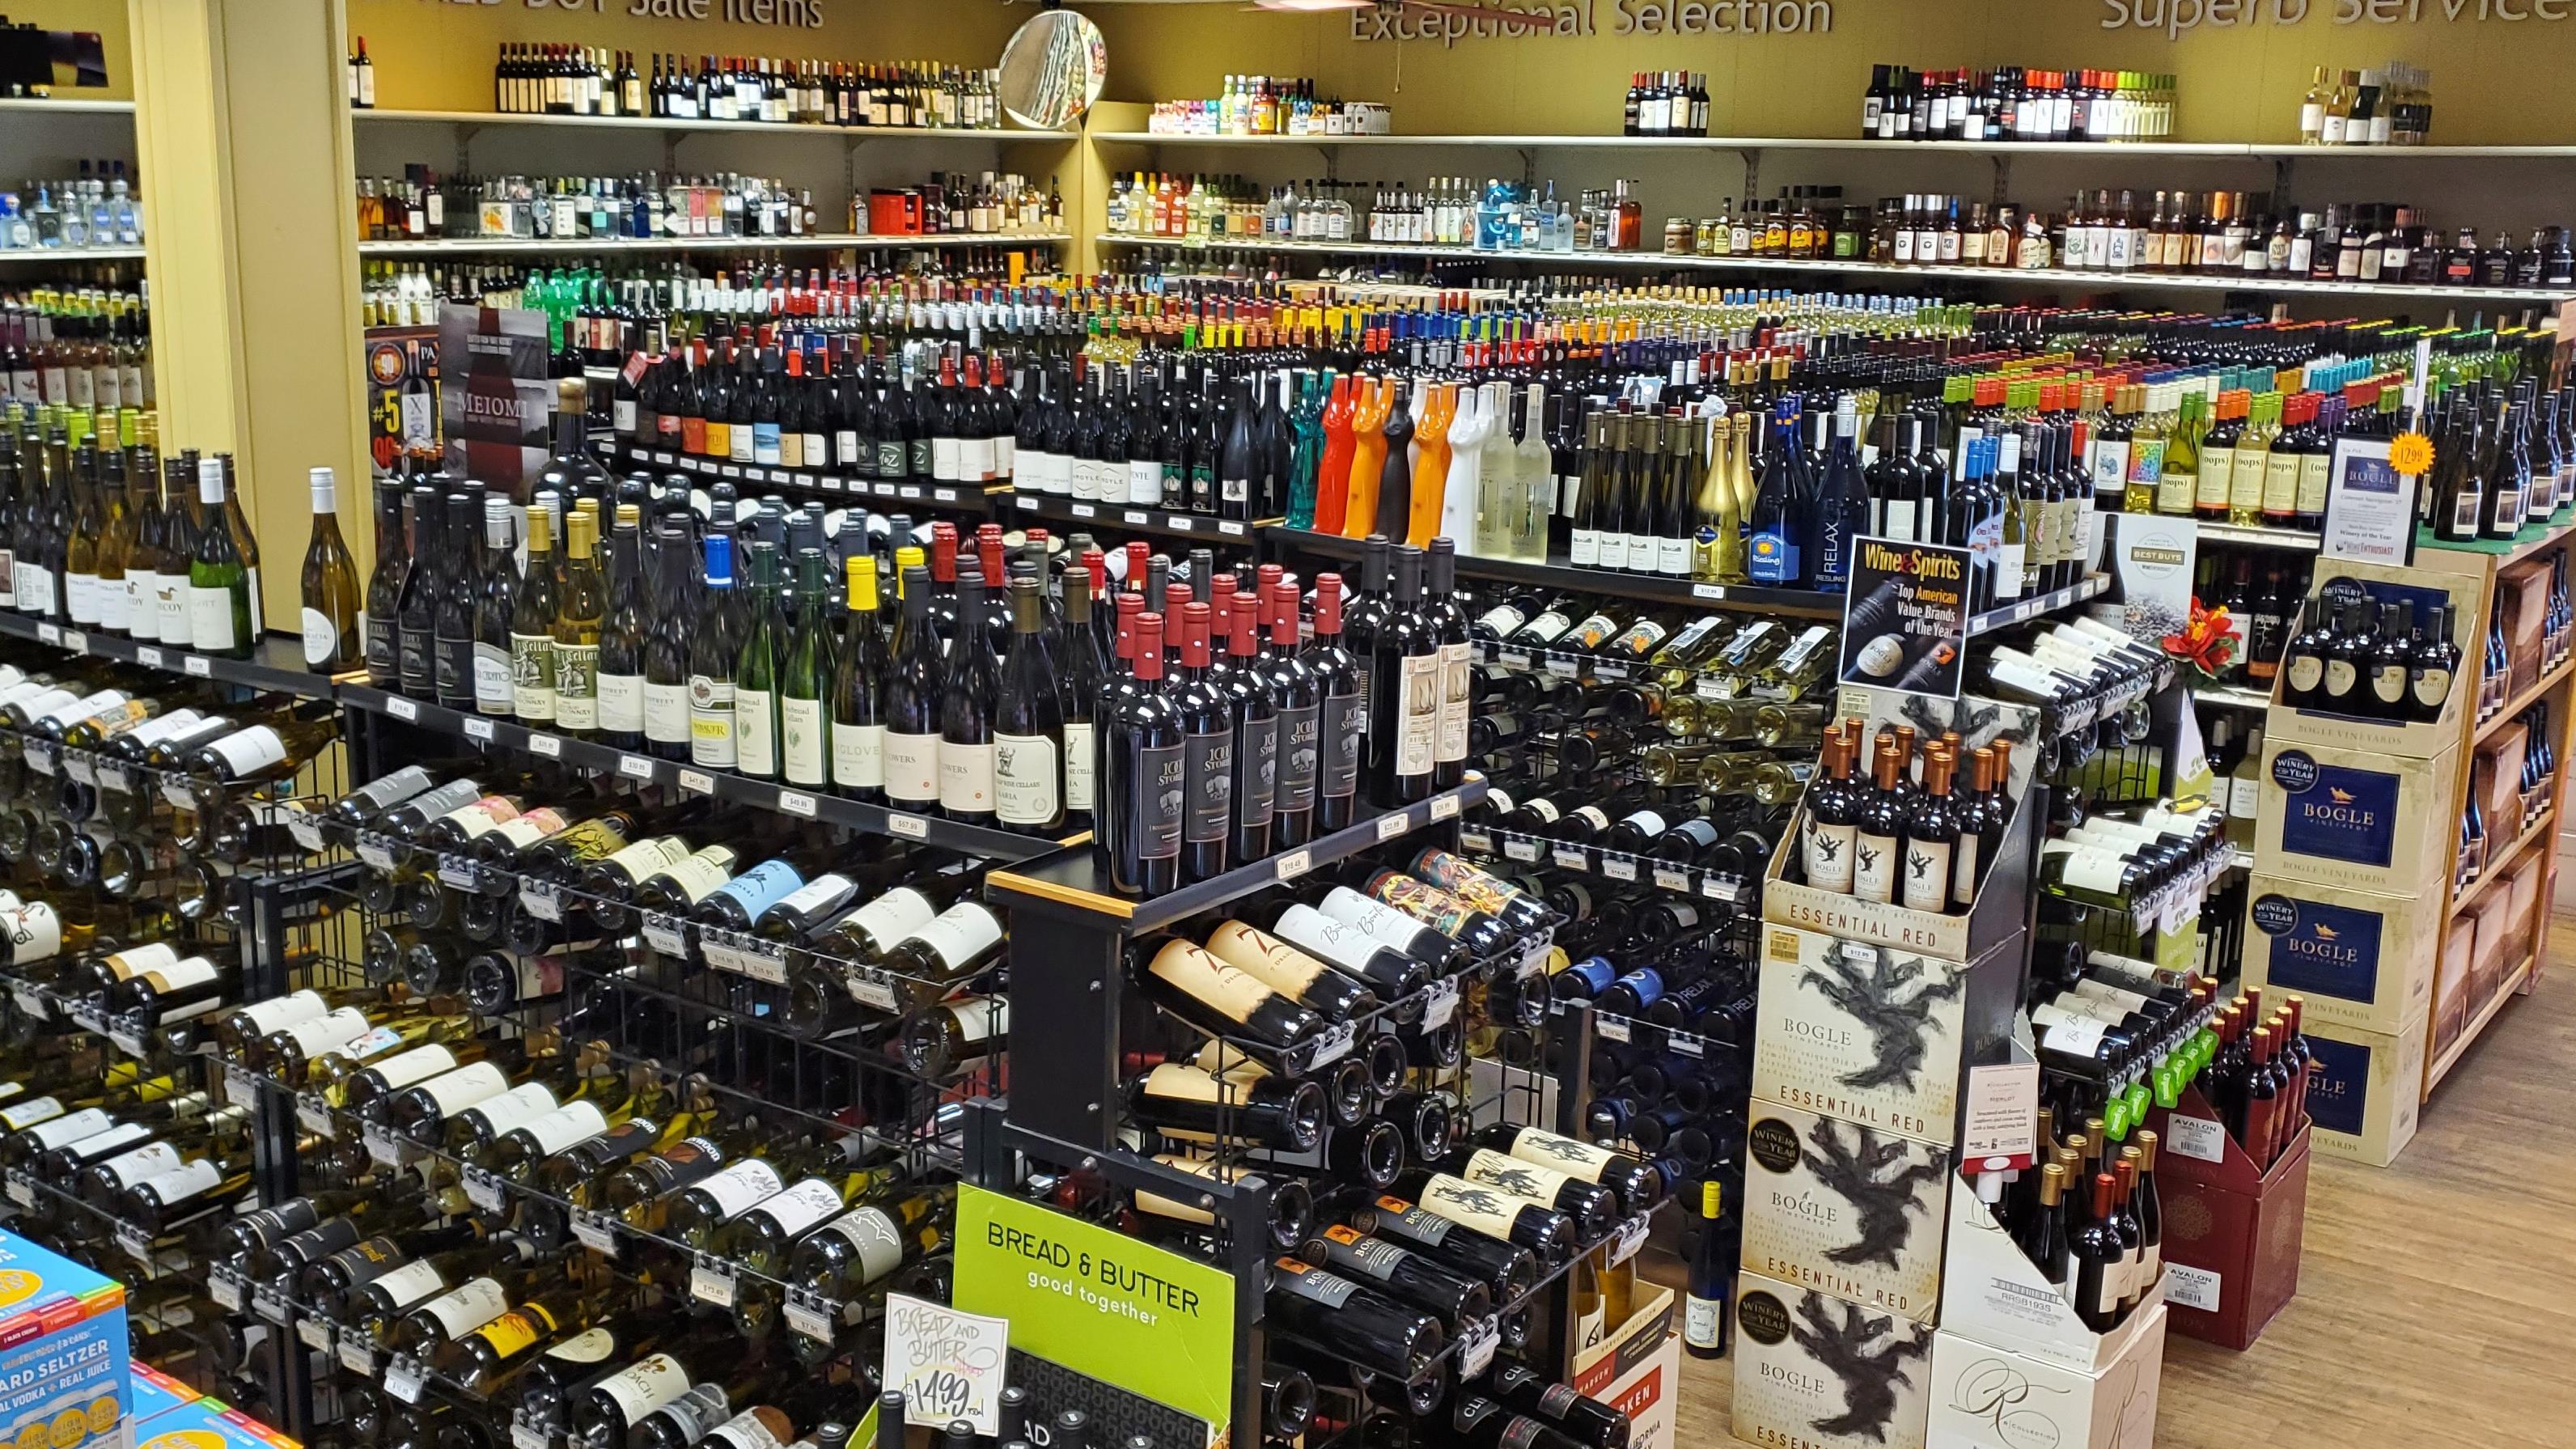 Ridgley Wine & Spirits/Liquor Stores                                                                                                                                                                                           